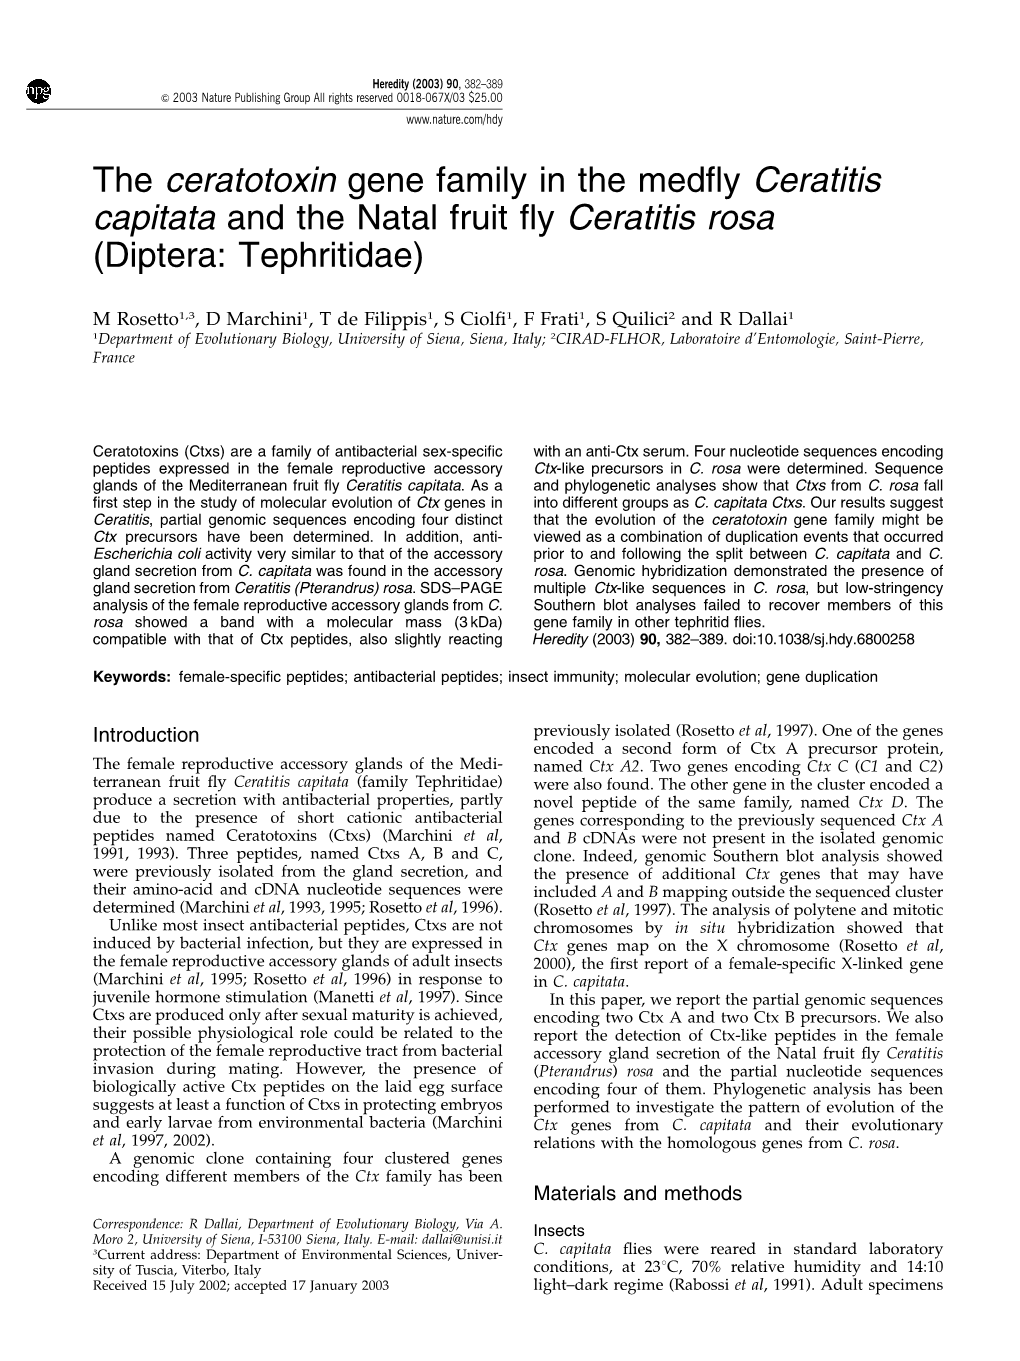 The Ceratotoxin Gene Family in the Medfly Ceratitis Capitata and The